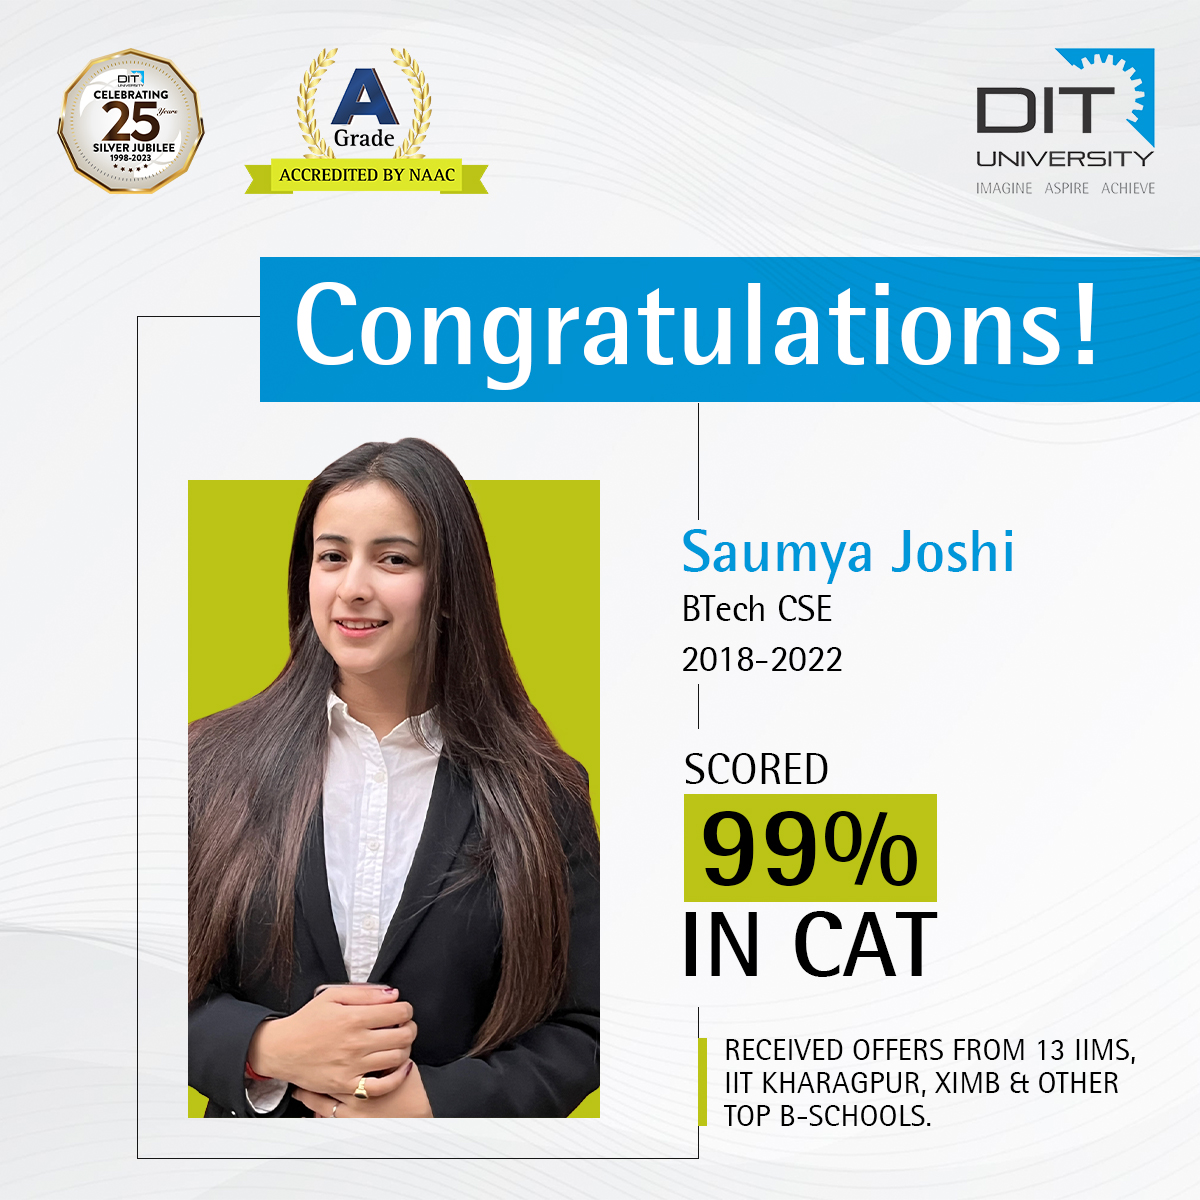  Congratulations  Saumya, for scored 99% in CAT Exam